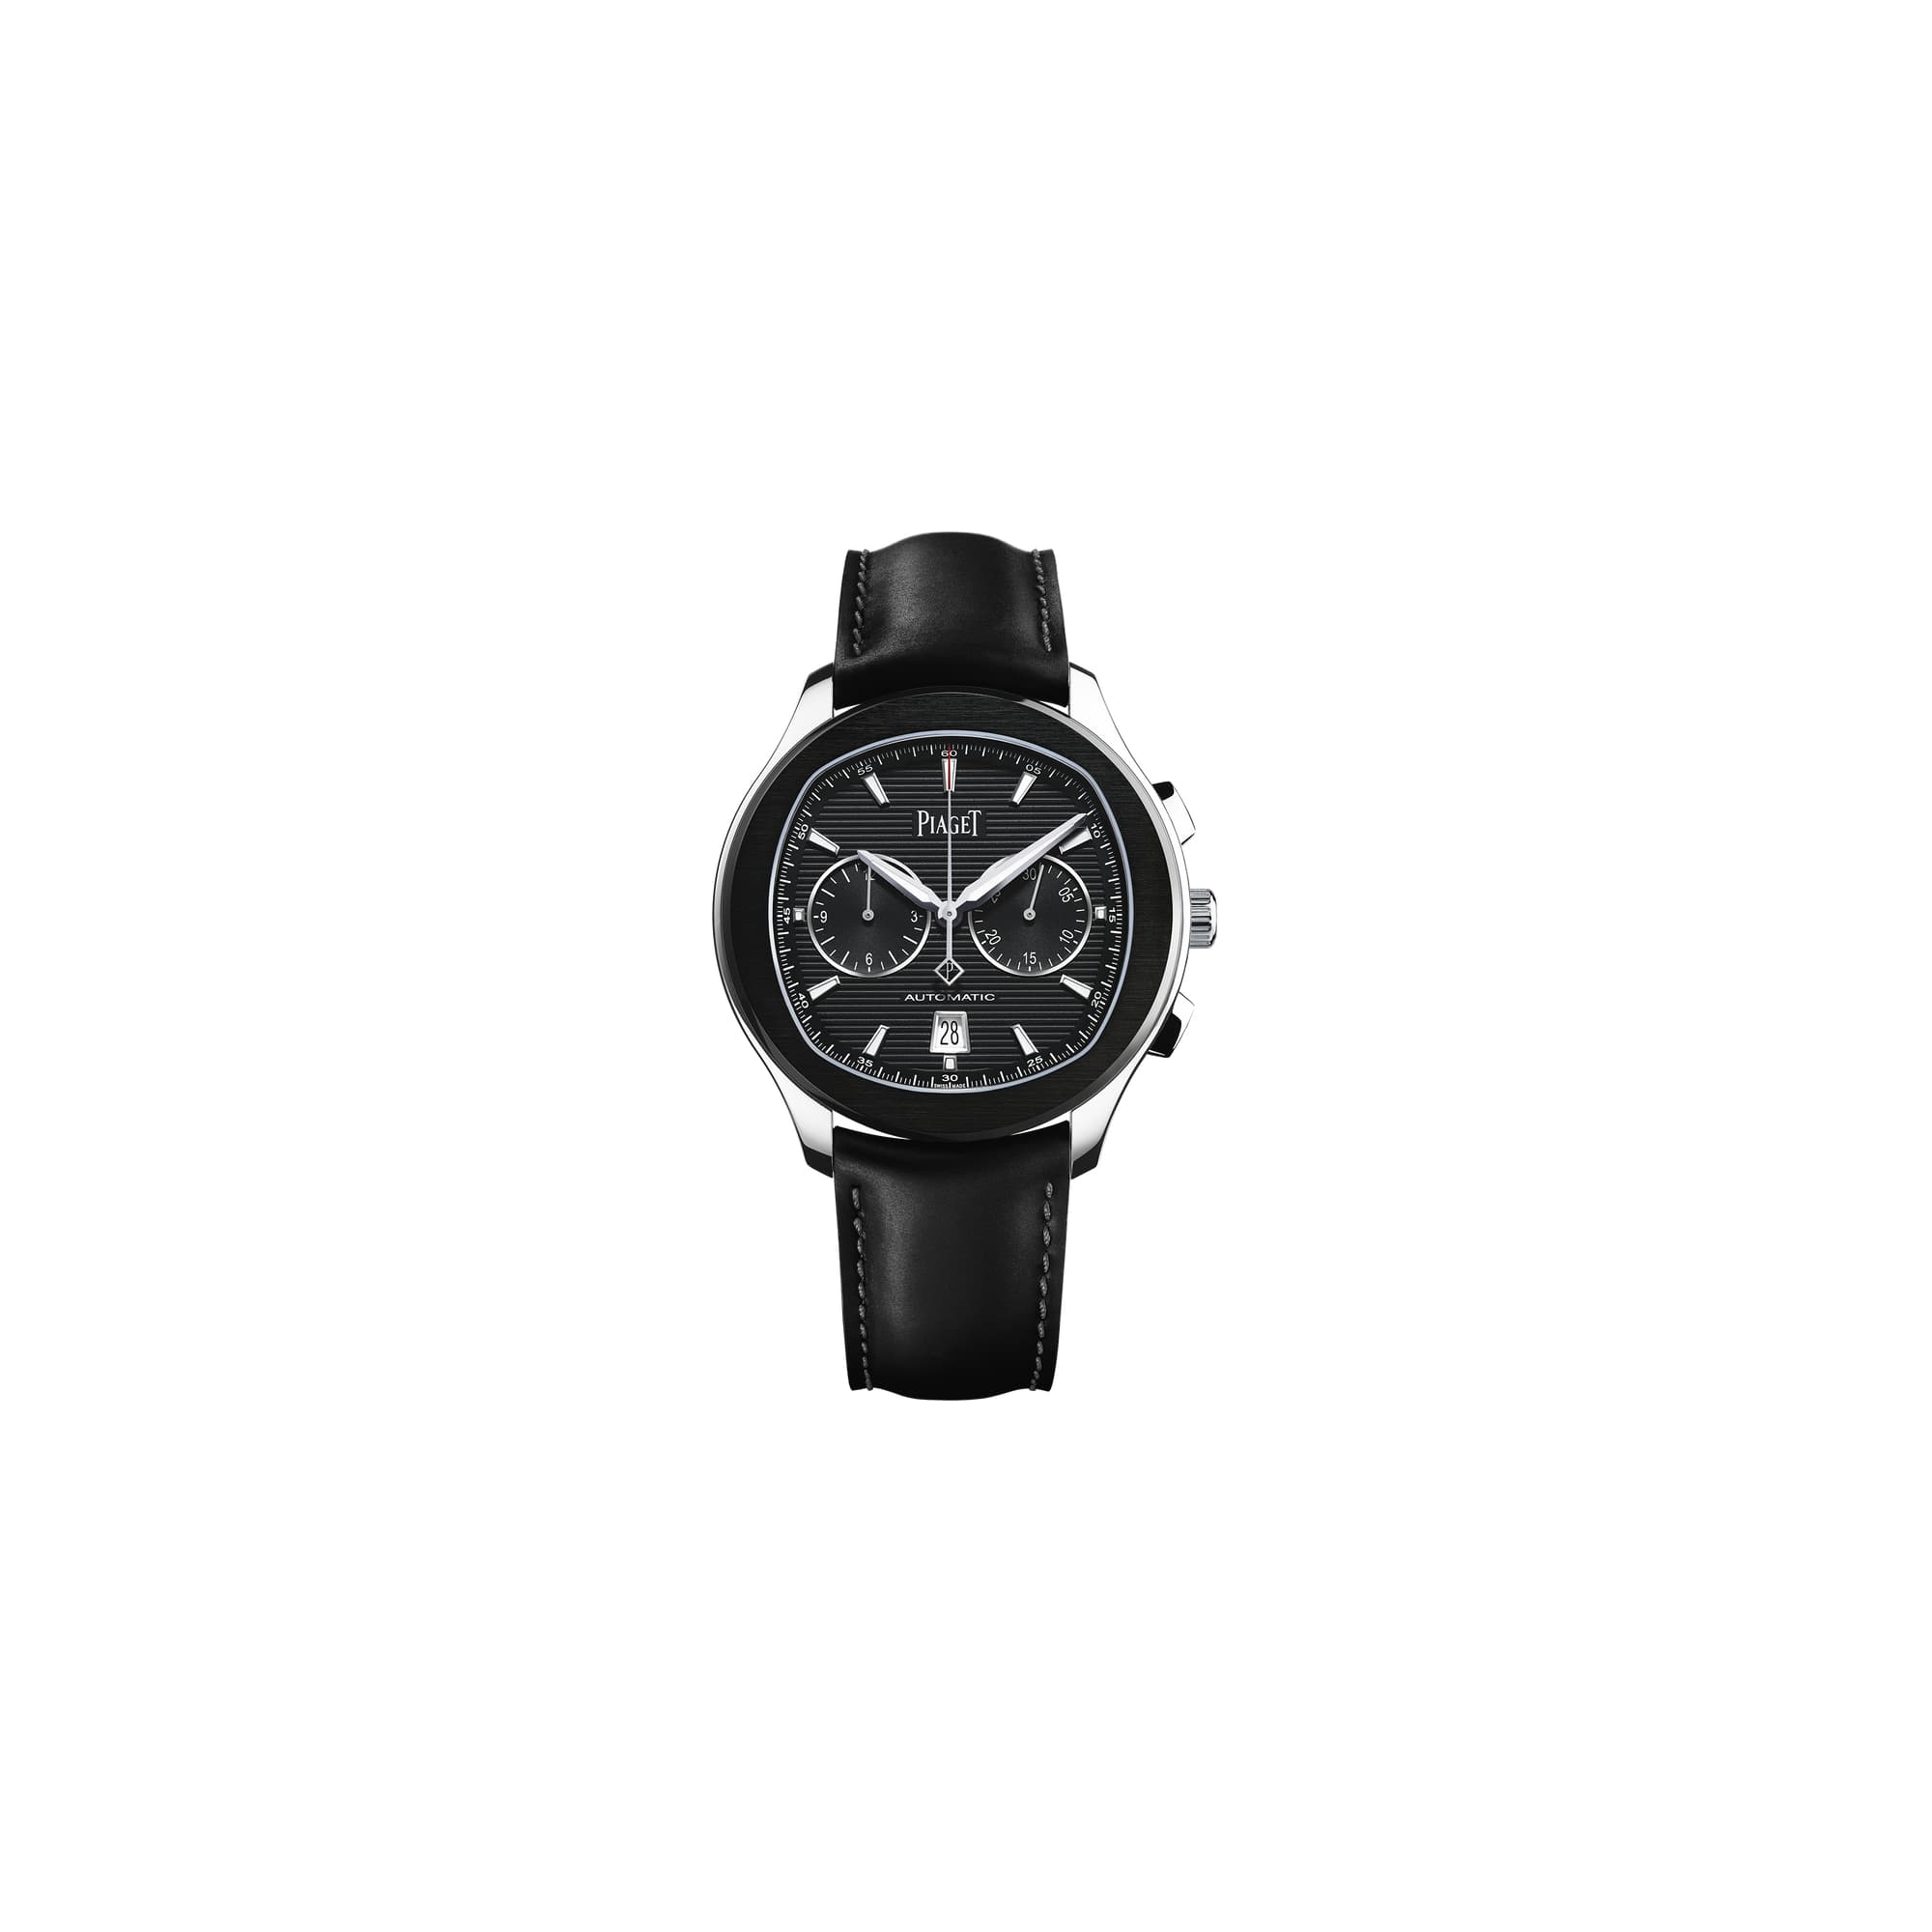 Steel Chronograph Watch - Piaget Luxury Men’s Watch G0A42002